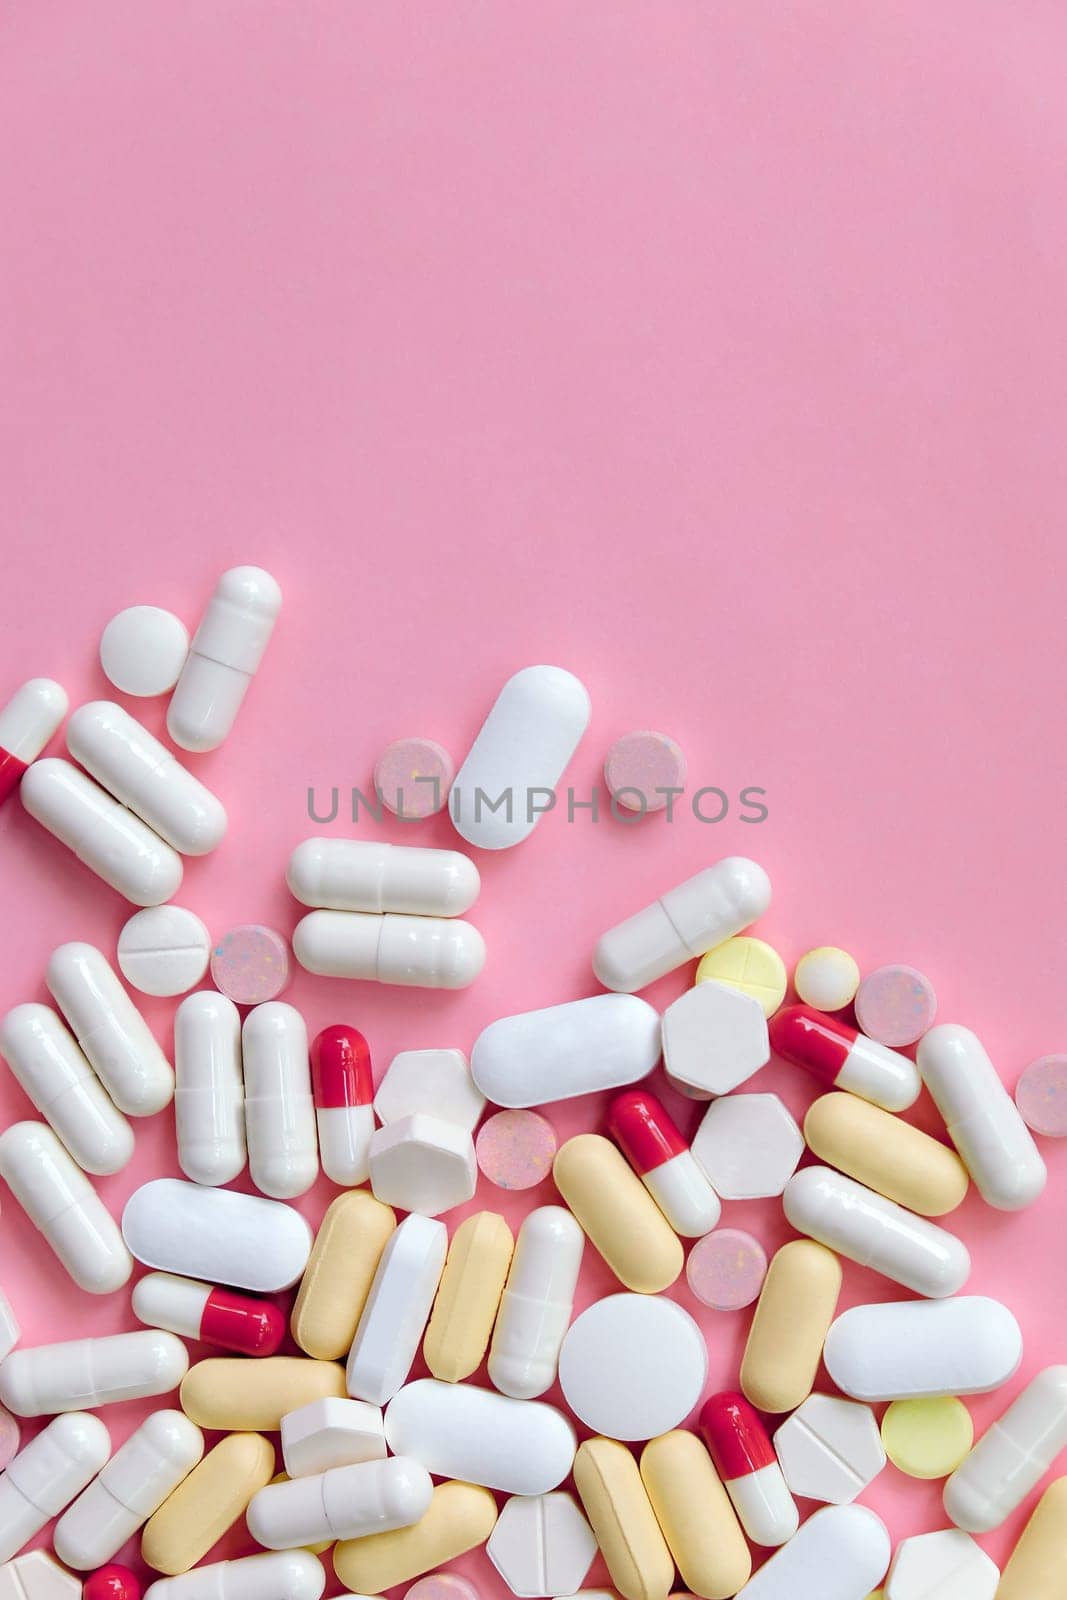 Colorful Assortment Of Medicine, Capsule pills background